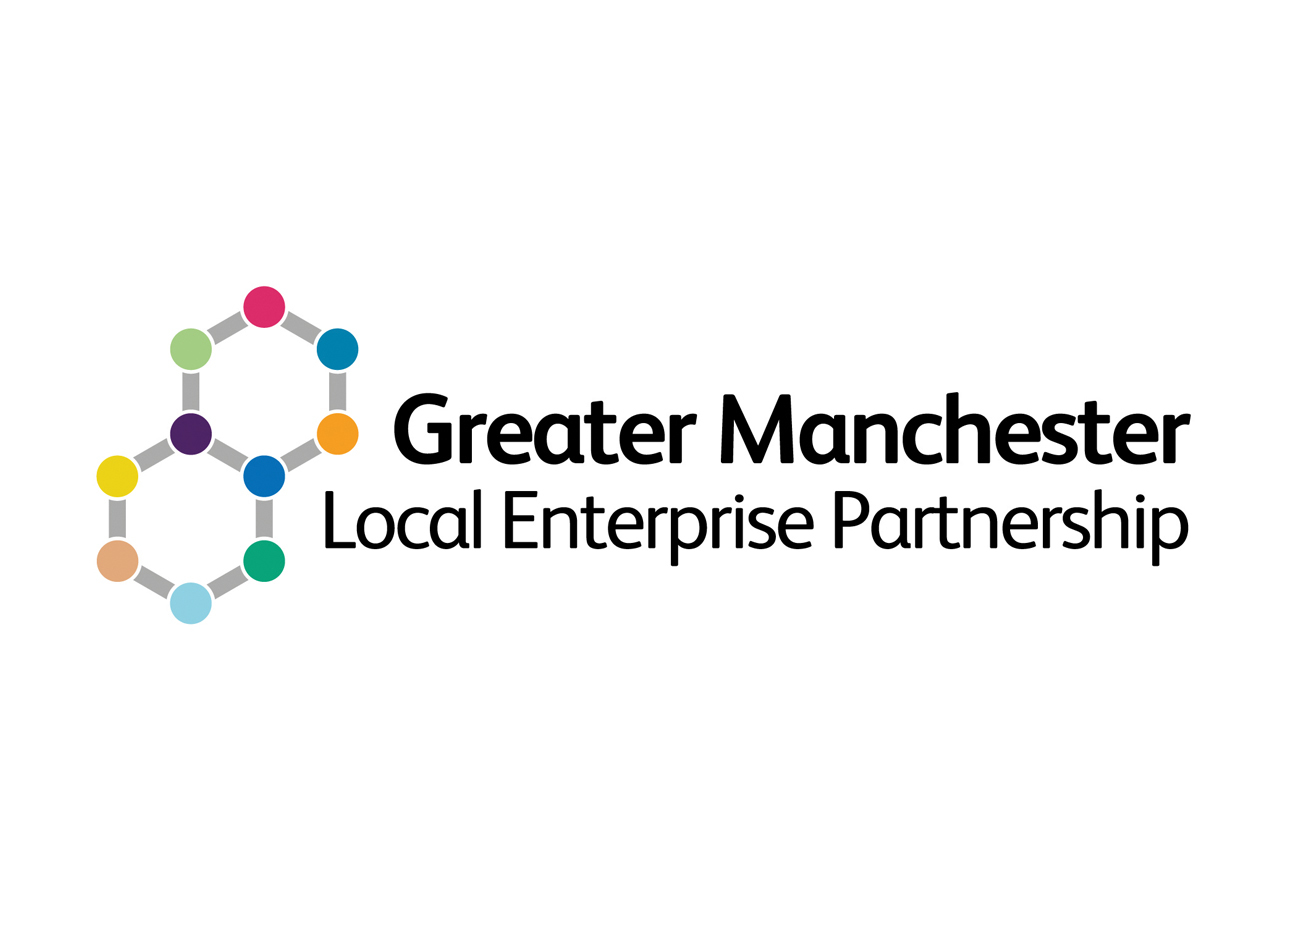 The Greater Manchester Local Enterprise Partnership logo